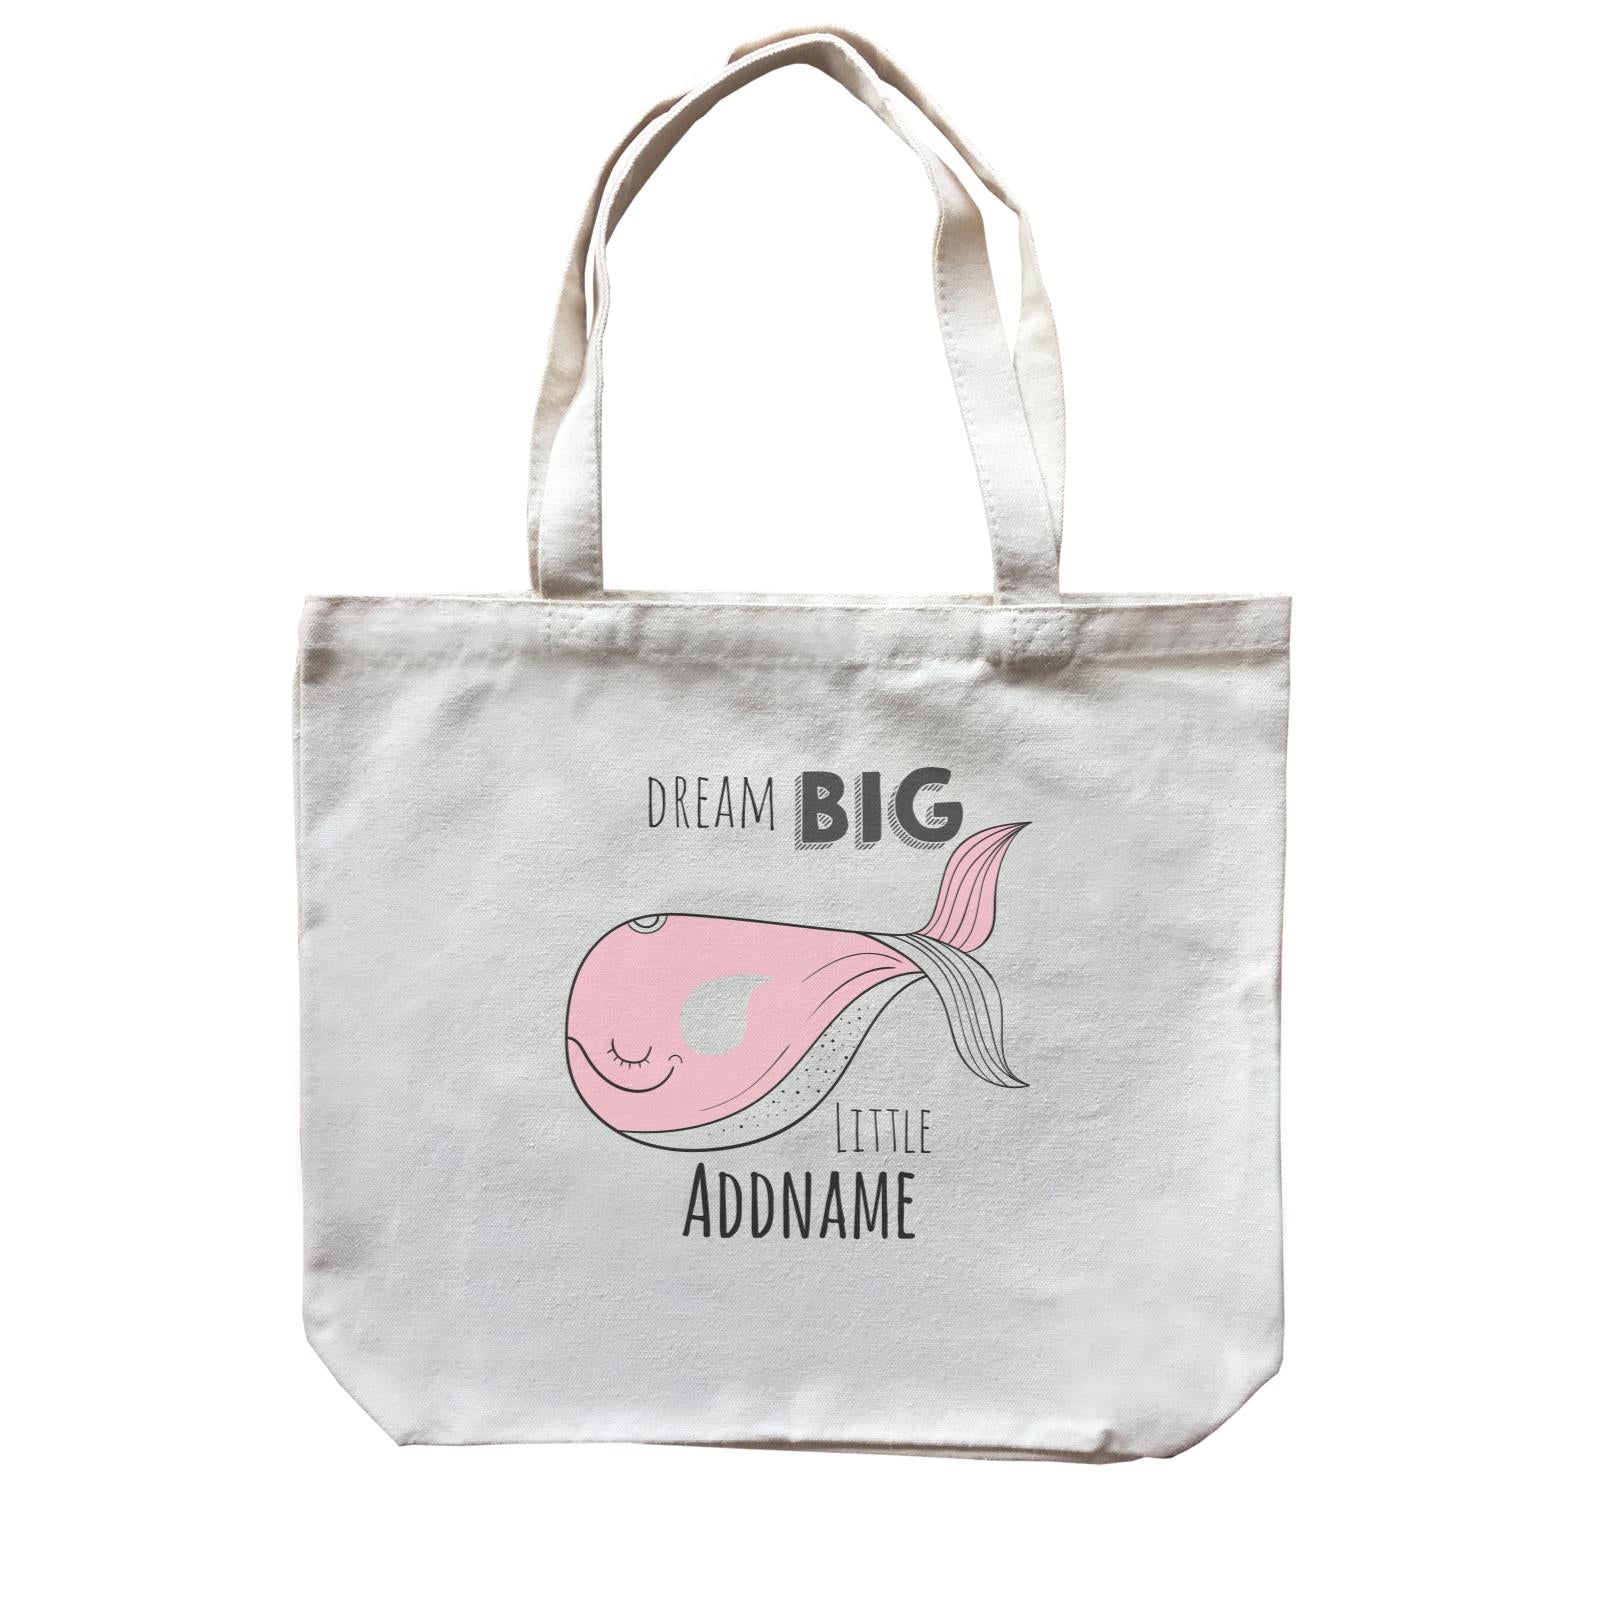 Drawn Ocean Elements Dream Big Pink Whale Little Addname Canvas Bag